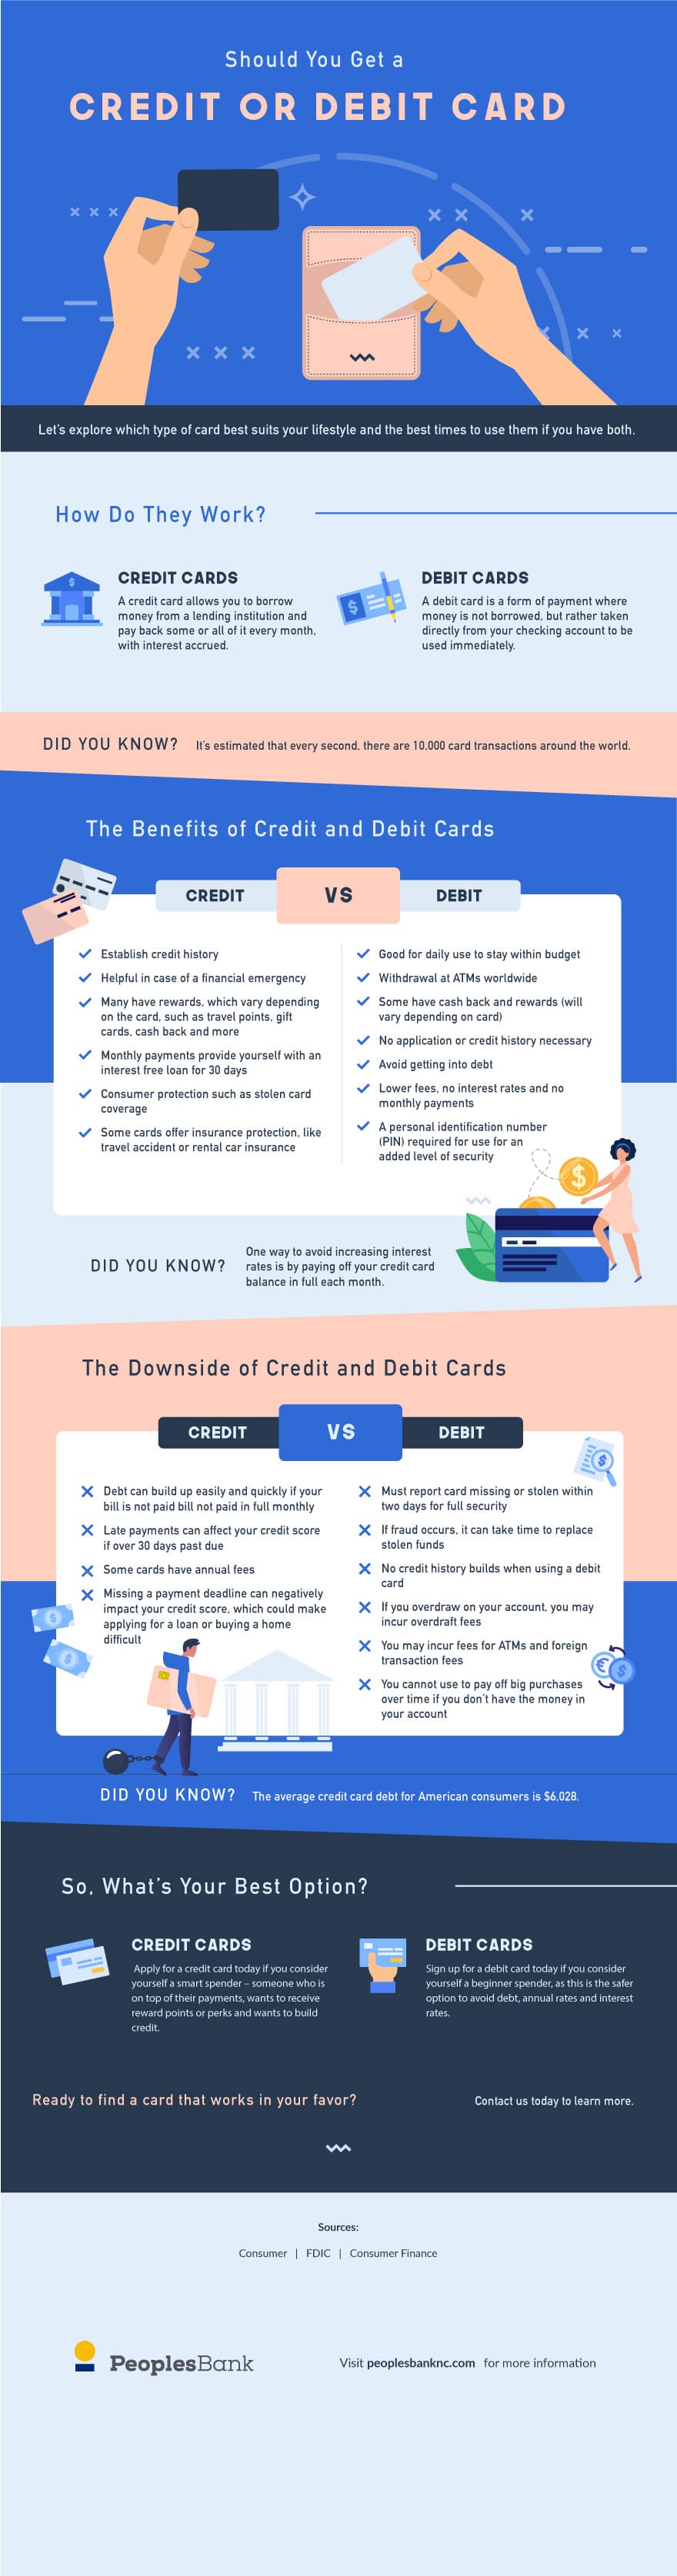 infographic-credit-card-vs-debit-card-Peoples-Bank-NC.jpg